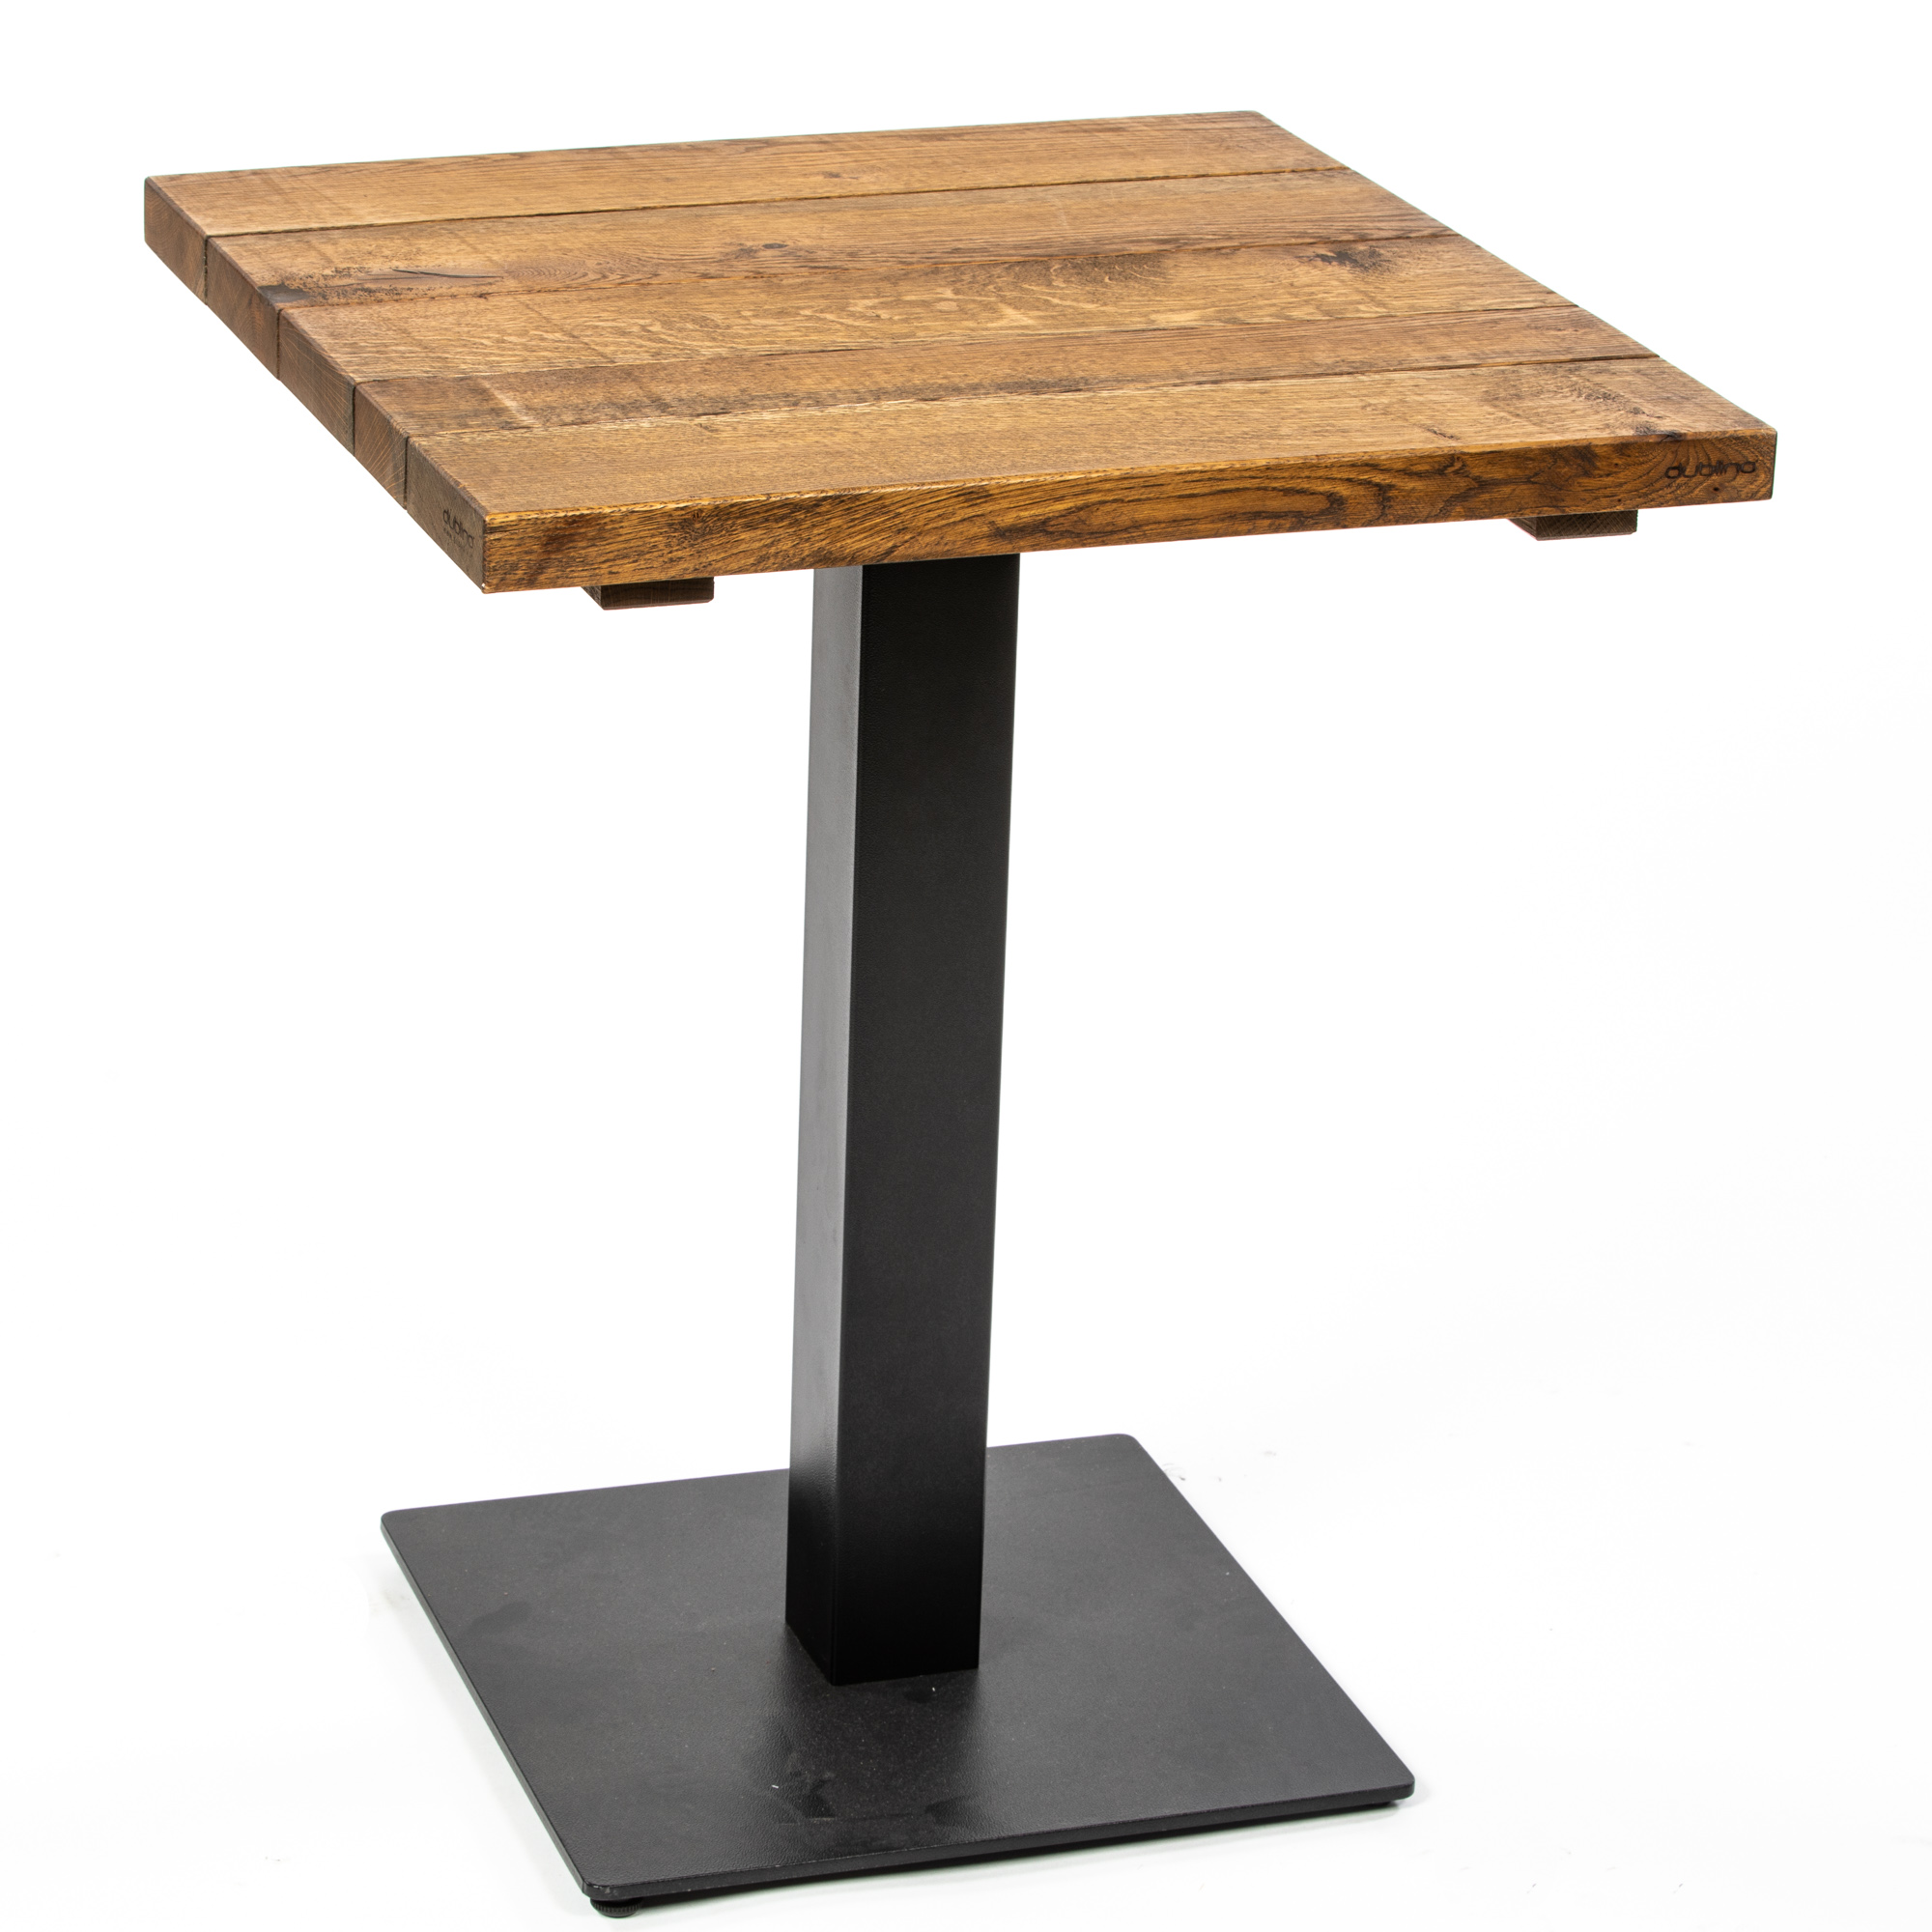 Massivholz Tischplatte RUSTIKAL OILED, Eichenlatten geölt, viele Formate, Stärke 30 mm